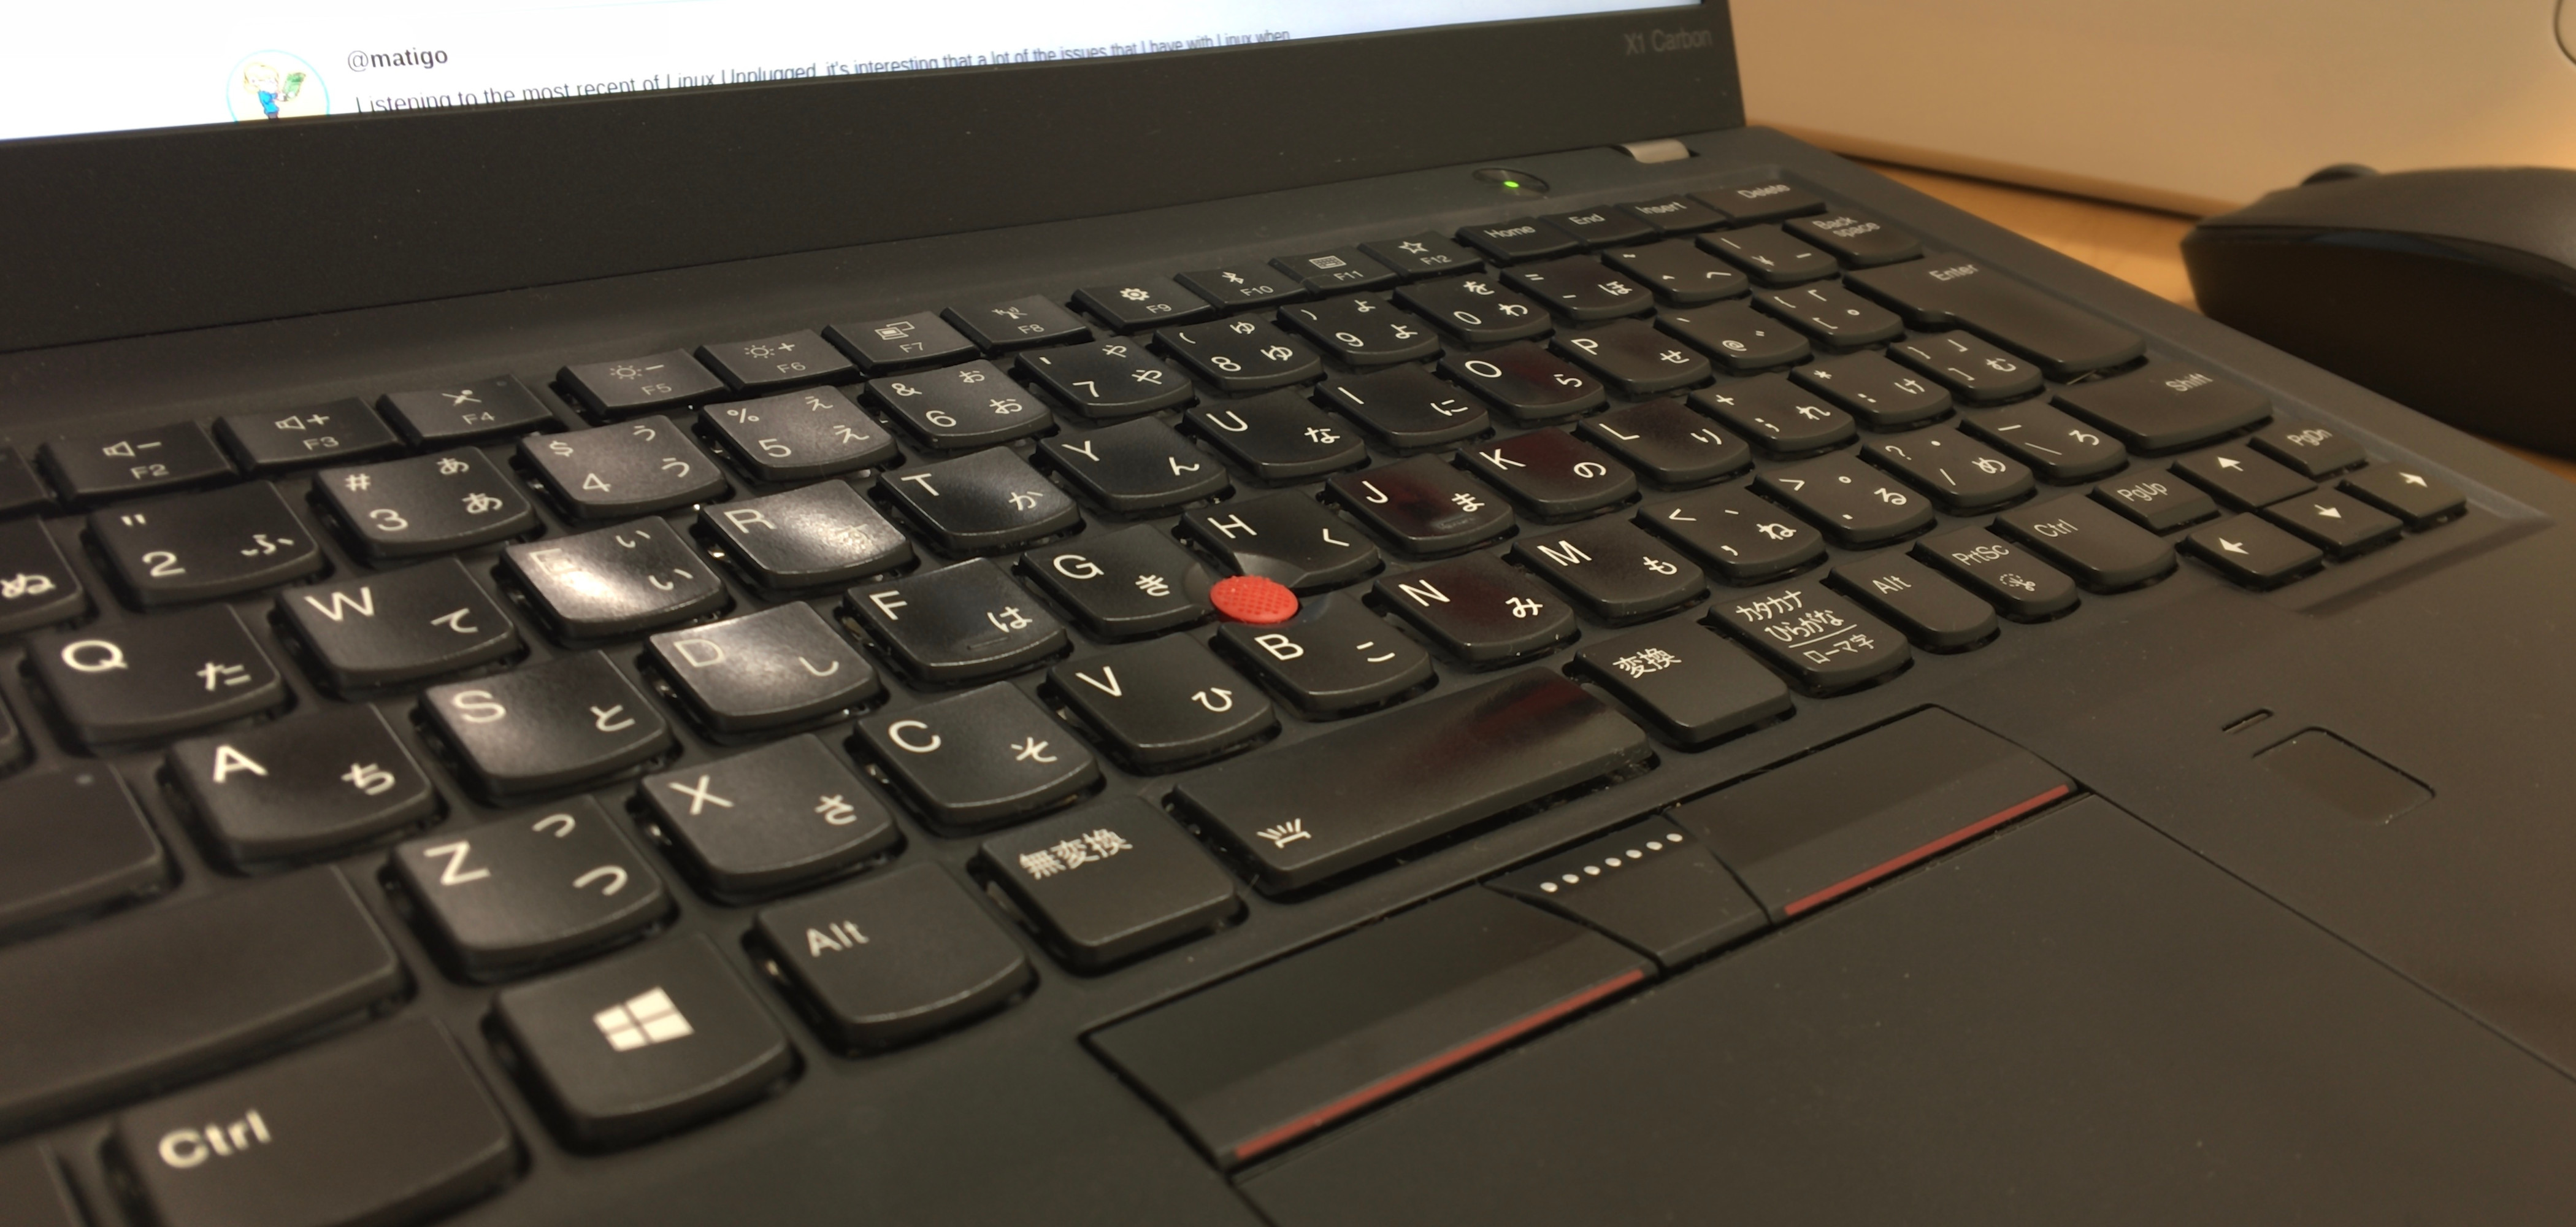 The ThinkPad X1 Carbon Keyboard